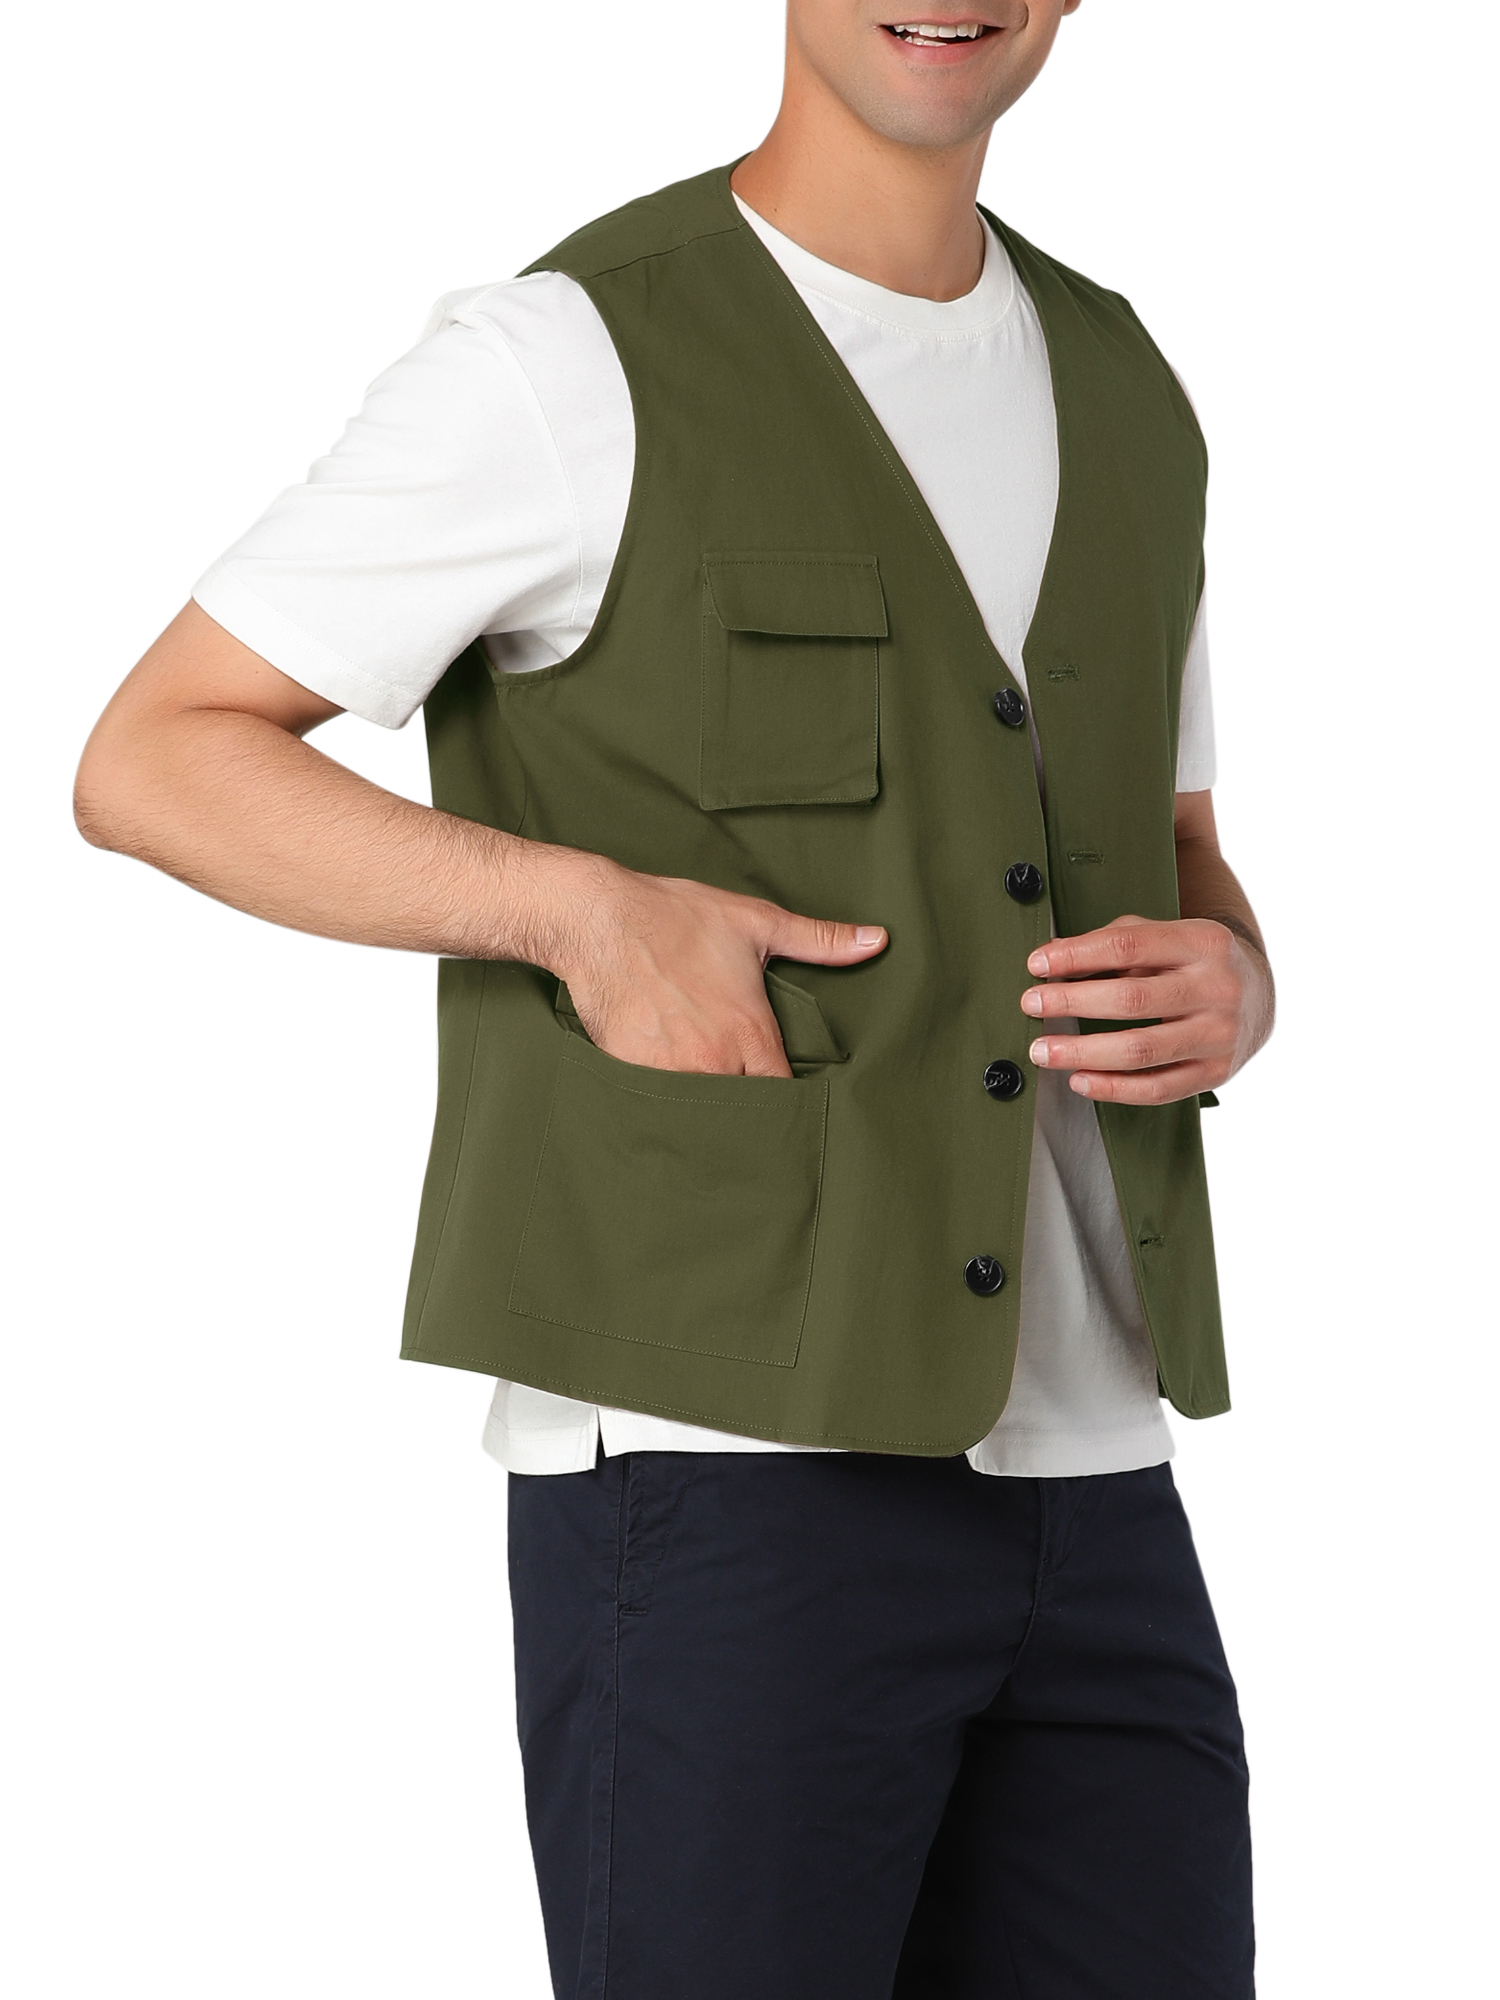 MODA NOVA Big & Tall Men's Waistcoats Casual Cotton Sleeveless Pockets Button Down V Neck Cargo Vests Green LT - image 4 of 5